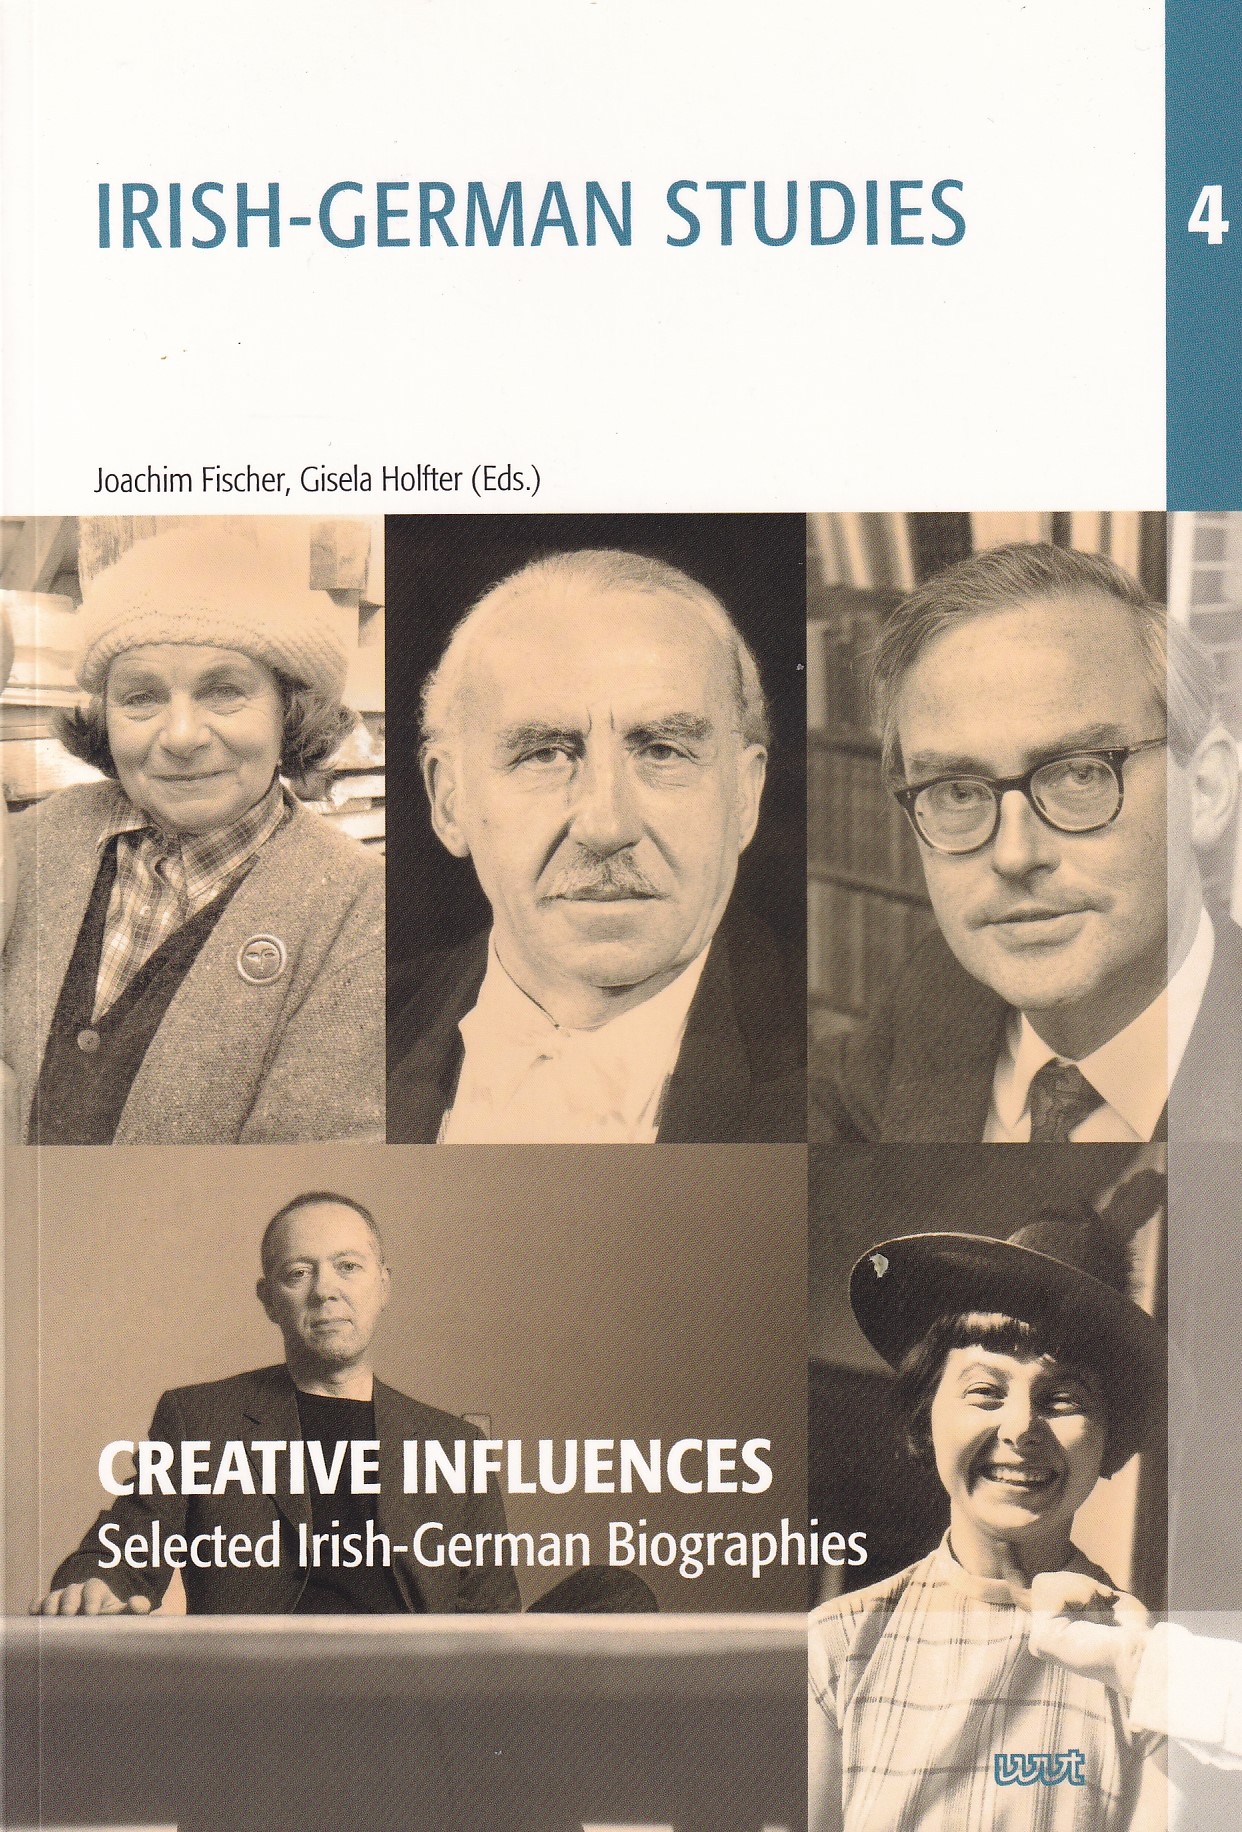 Irish-German Studies 4: Creative Influences – Selected Irish-German Biographies | Joachim Fischer & Gisela Holfter (Eds.) | Charlie Byrne's